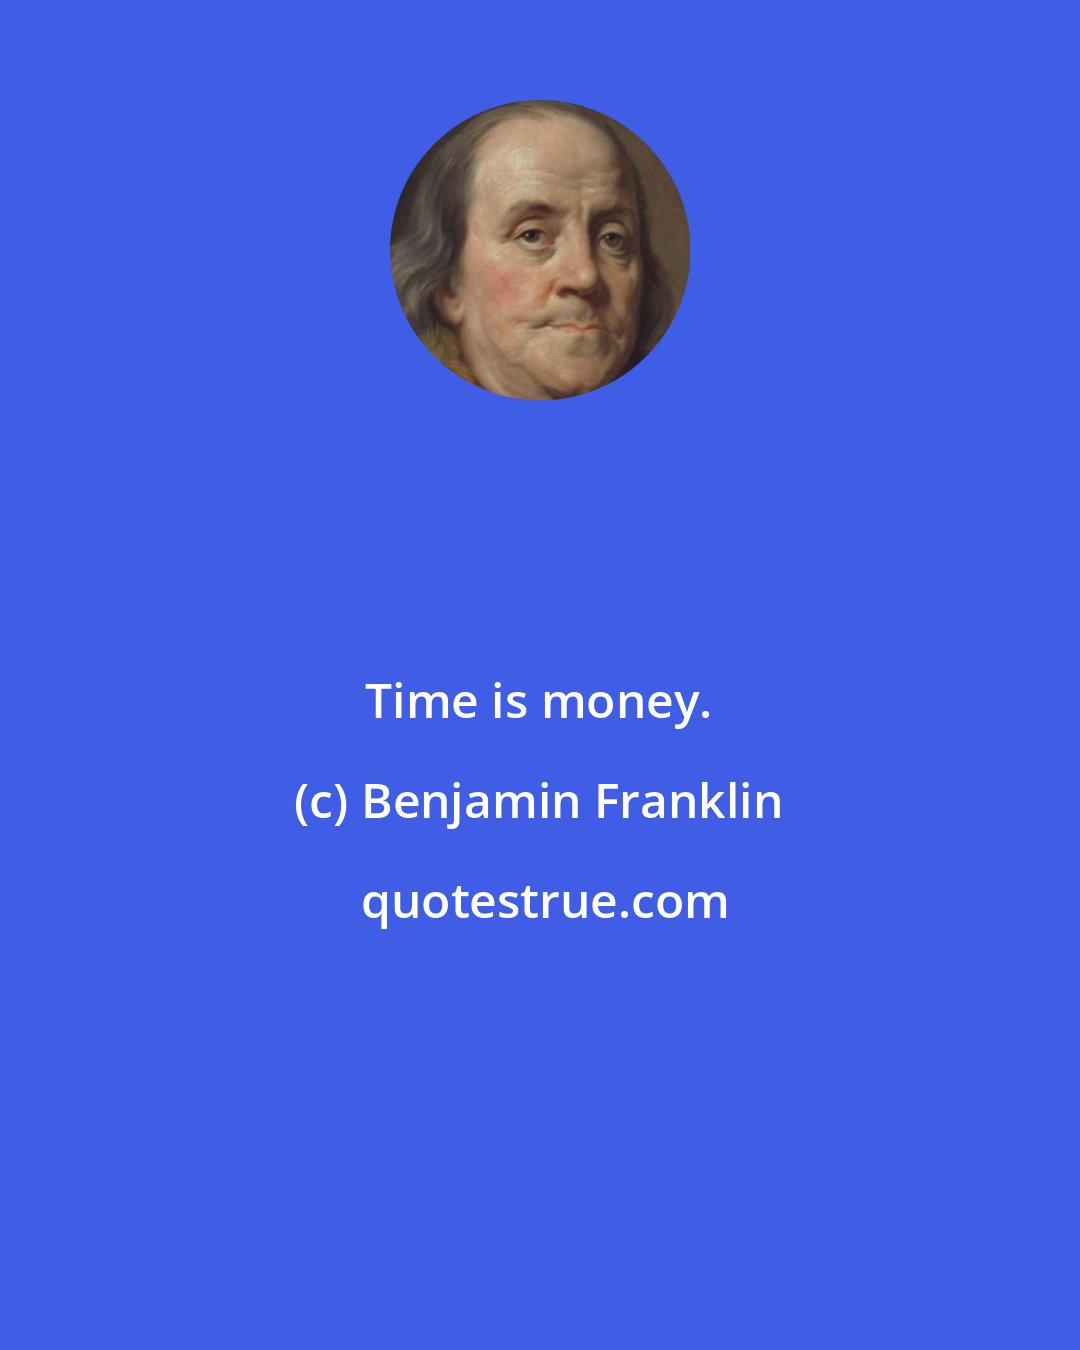 Benjamin Franklin: Time is money.